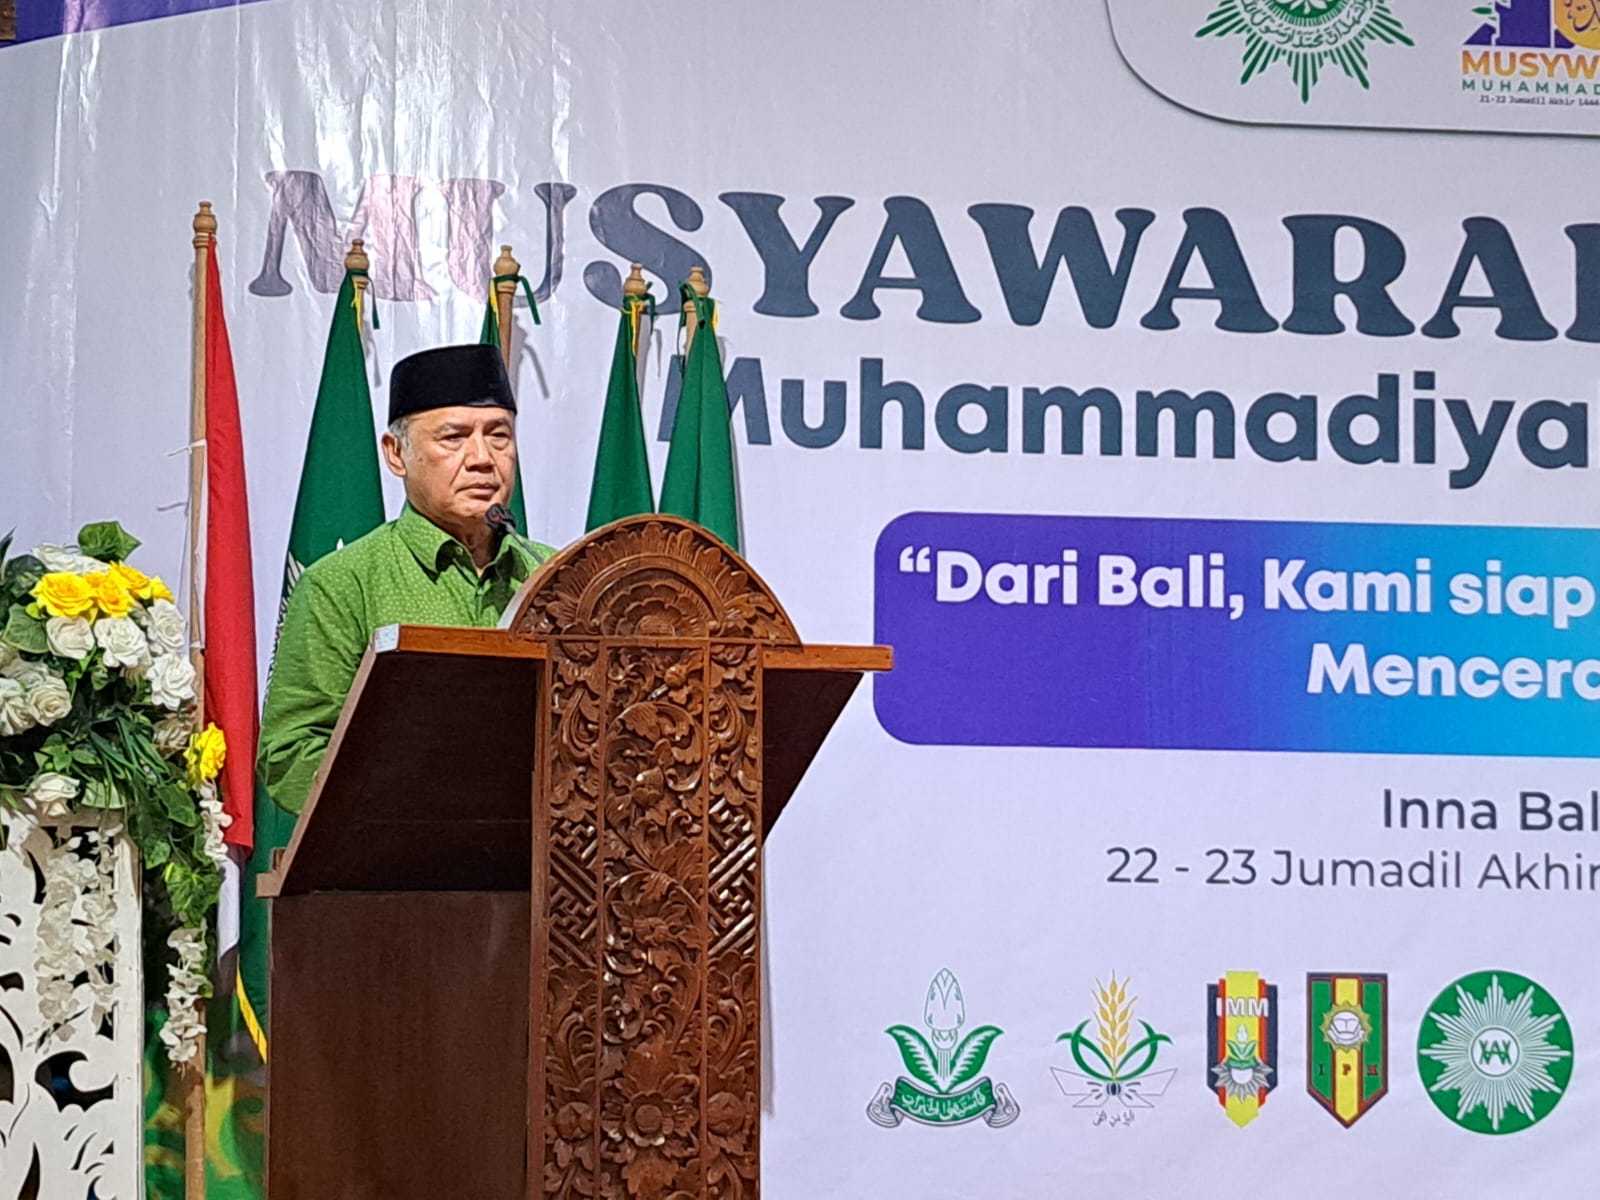 Musywil Diharapkan Jadi Penguat Muhammadiyah Bali Kerjakan Berbagai Program Amanat Muktamar